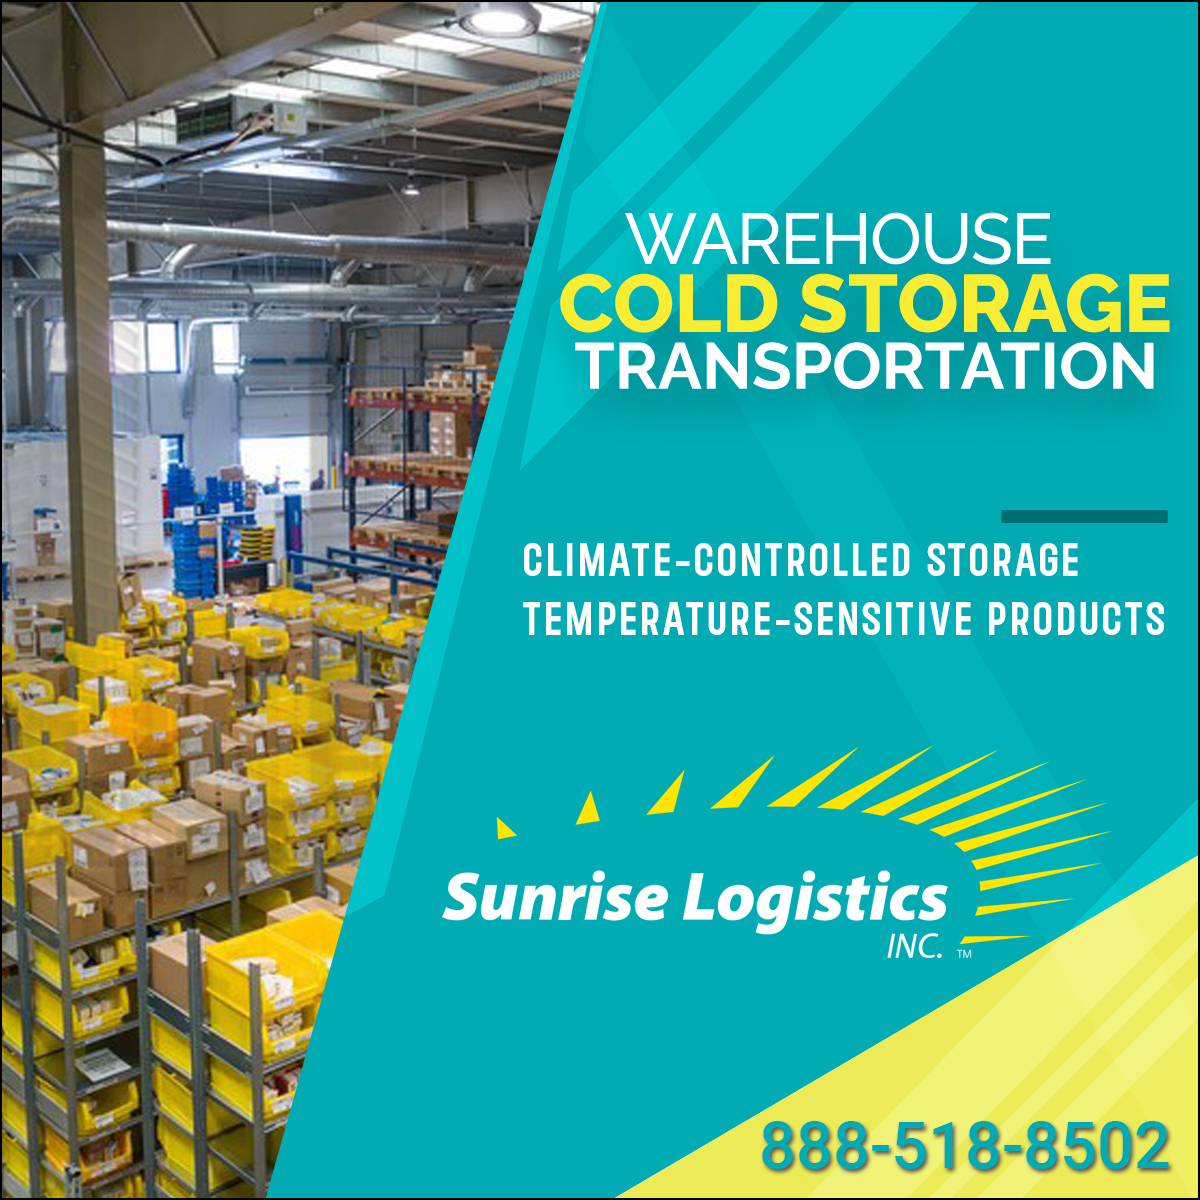 Sunrise Logistics, Inc